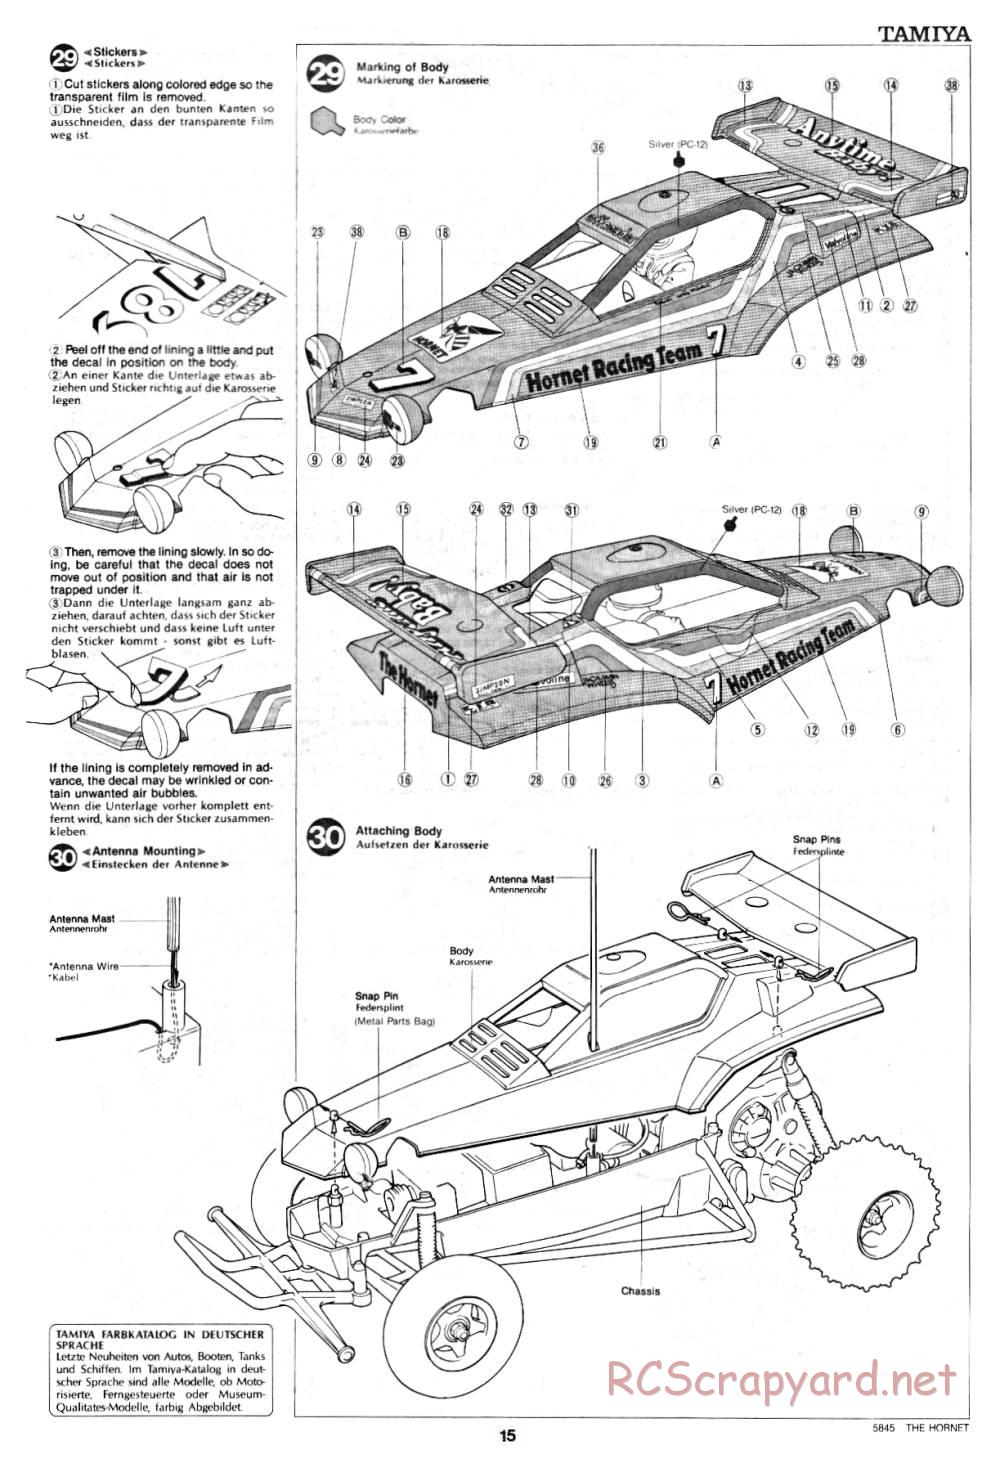 Tamiya - The Hornet - 58045 - Manual - Page 15